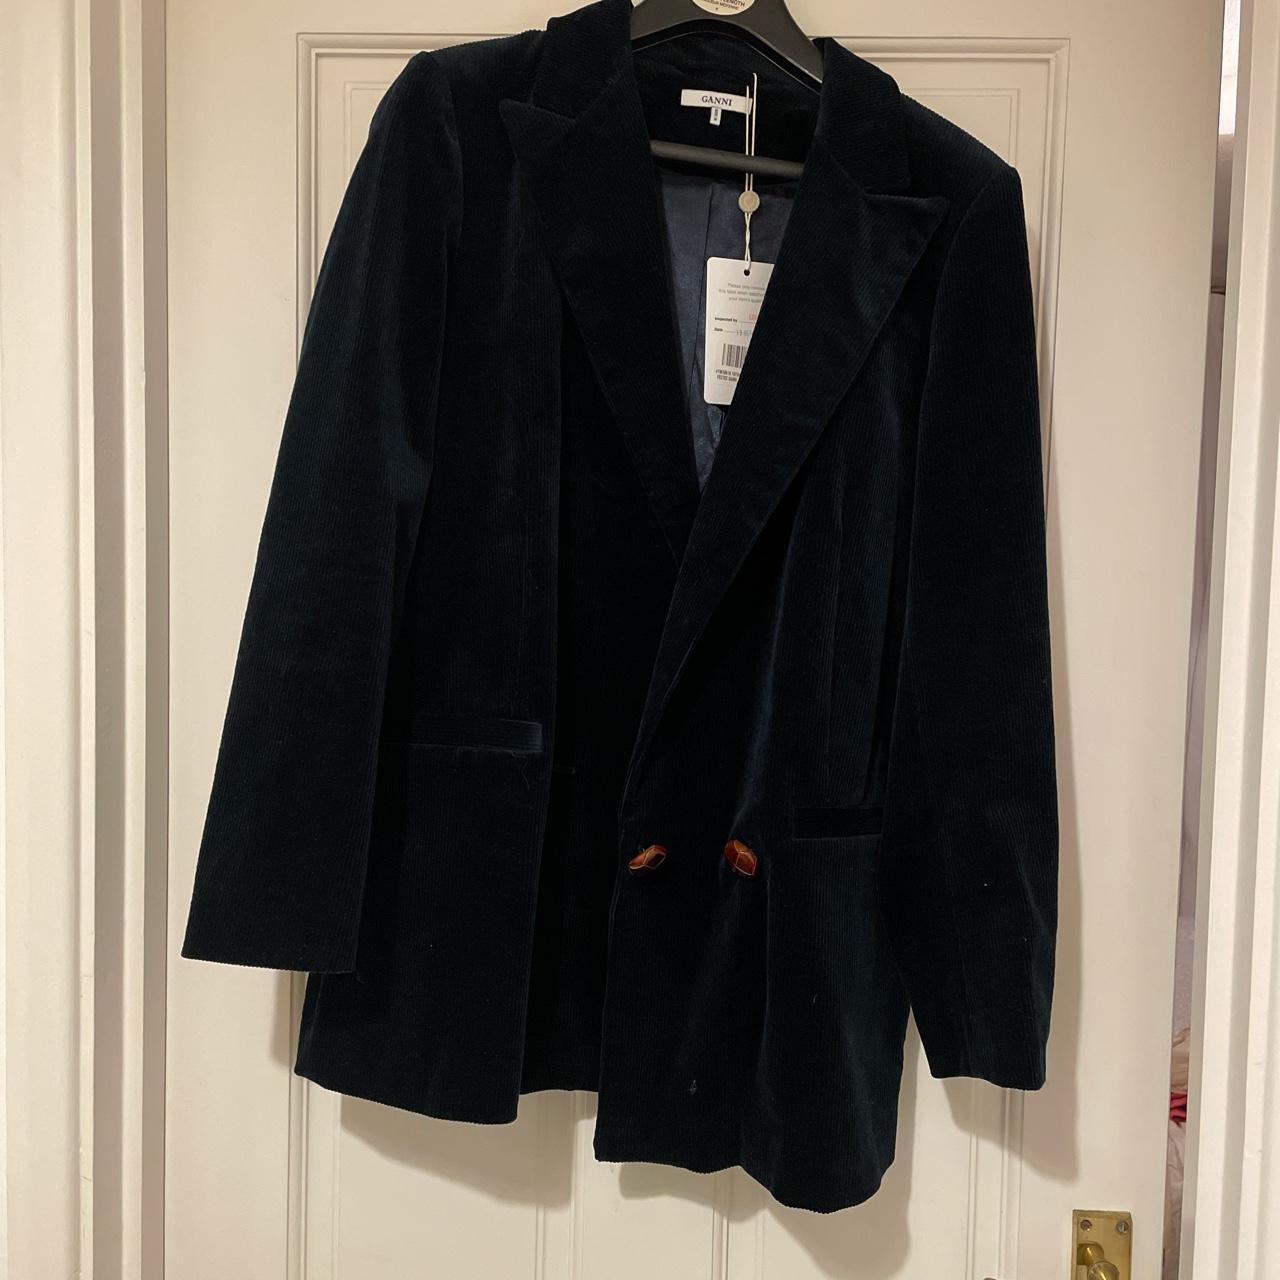 Ganni navy blue corduroy blazer jacket size 36 (UK... - Depop